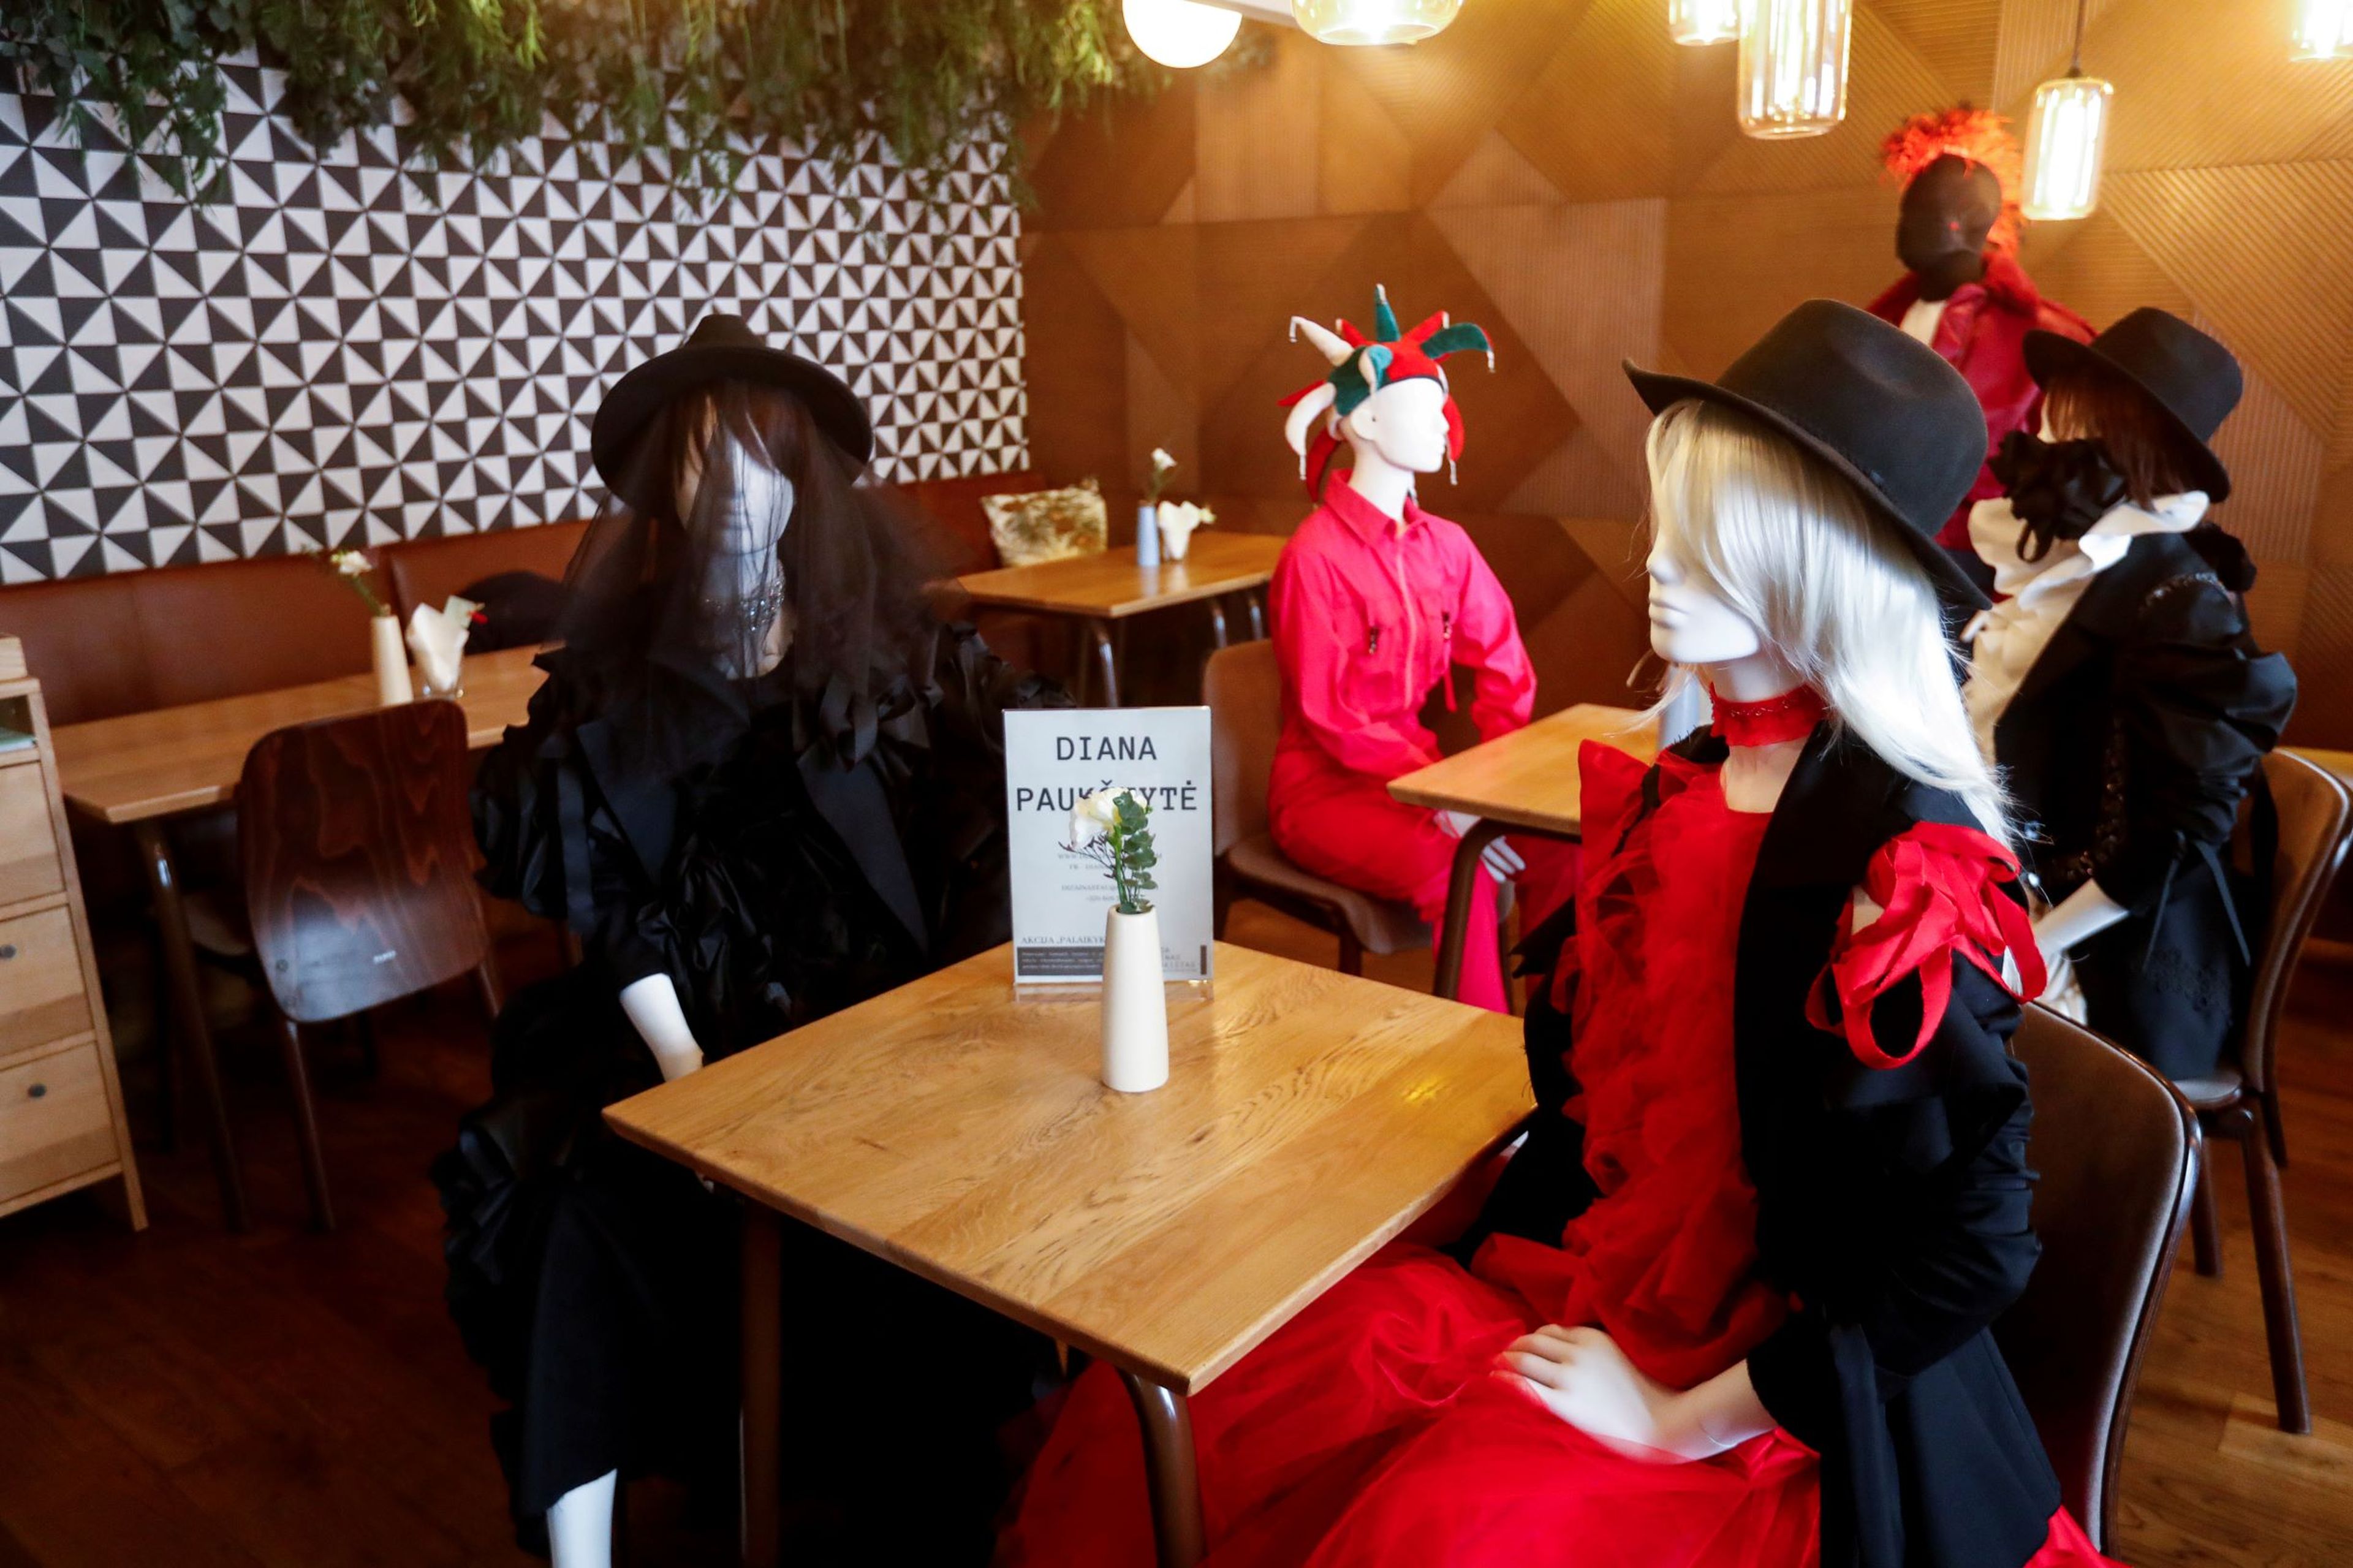 Maniquíes para rellenar la falta de aforo en un restaurante de Vilna, Lituania, durante la crisis del coronavirus.